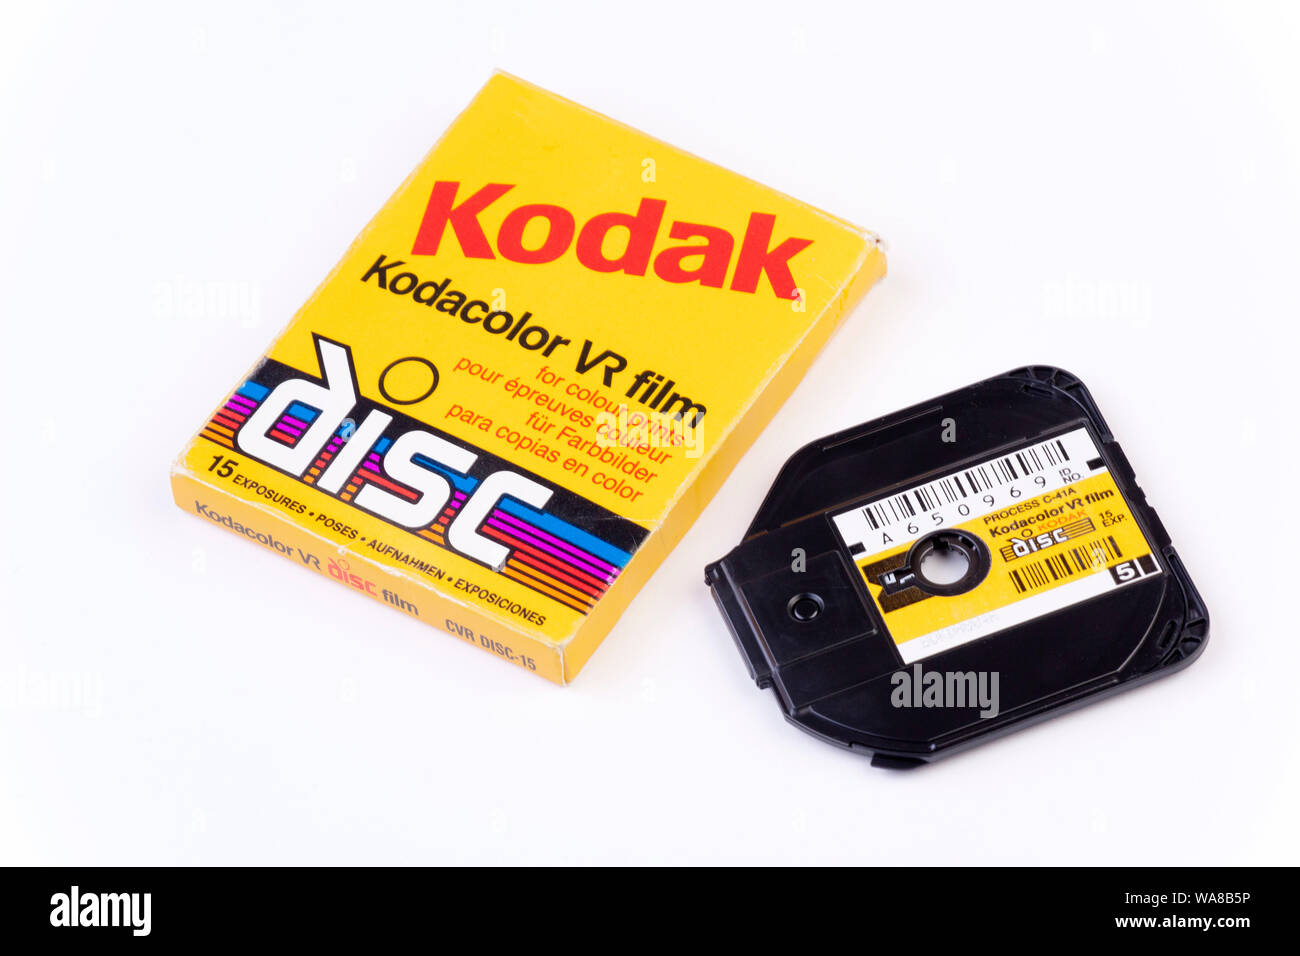 Kodak disc film which failed to sustain mass market growth Stock Photo